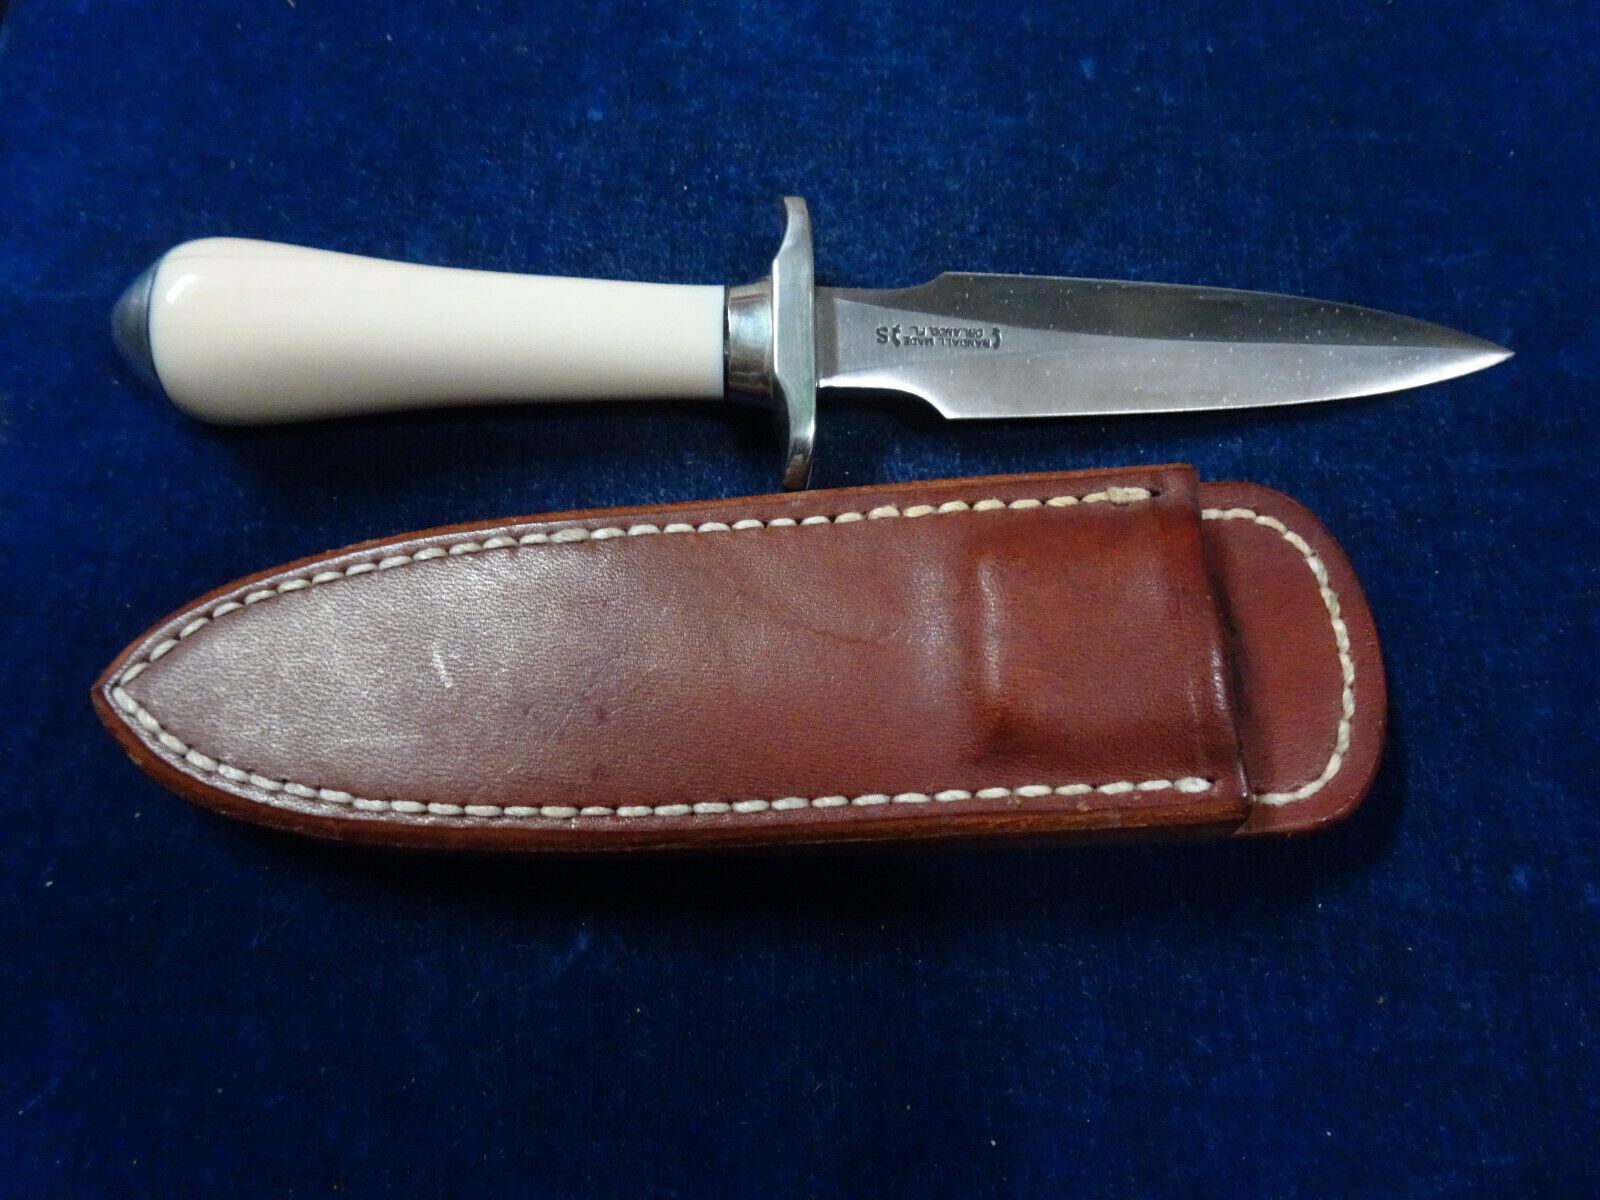 Orig Vintage Fixed Blade Knife "Randall Knives - Orlando Florida" White Handle